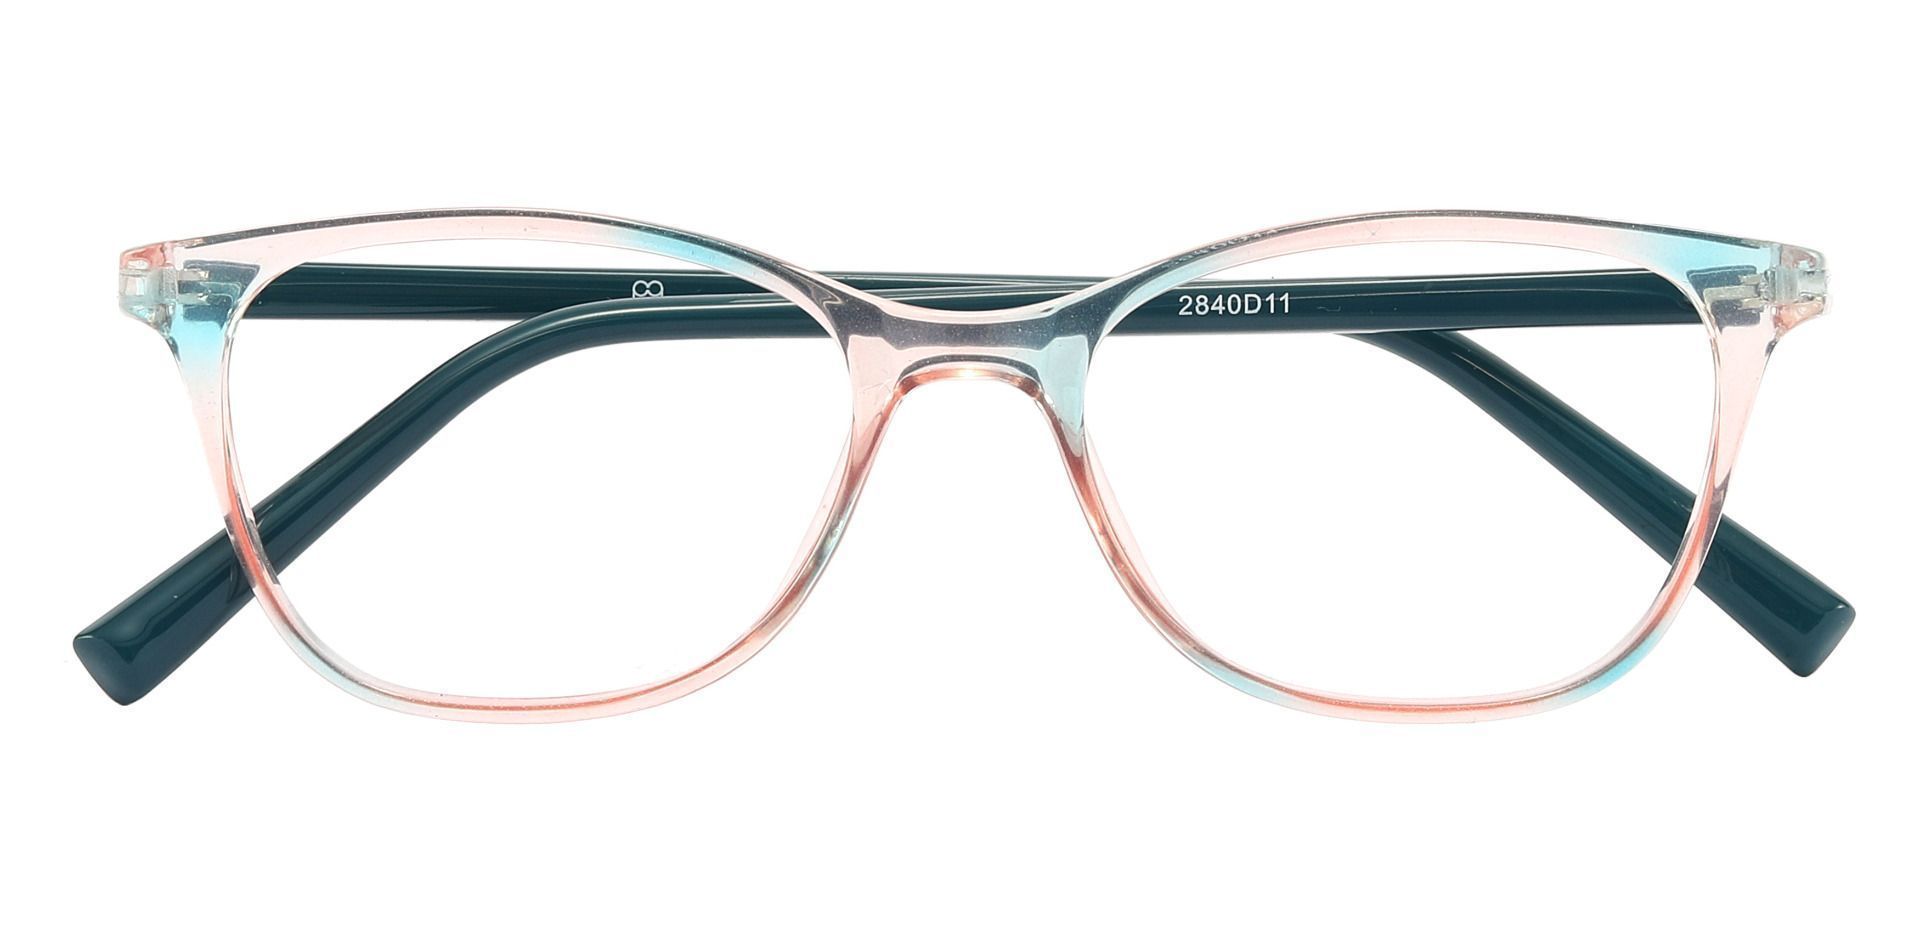 Bravo Rectangle Lined Bifocal Glasses - Green